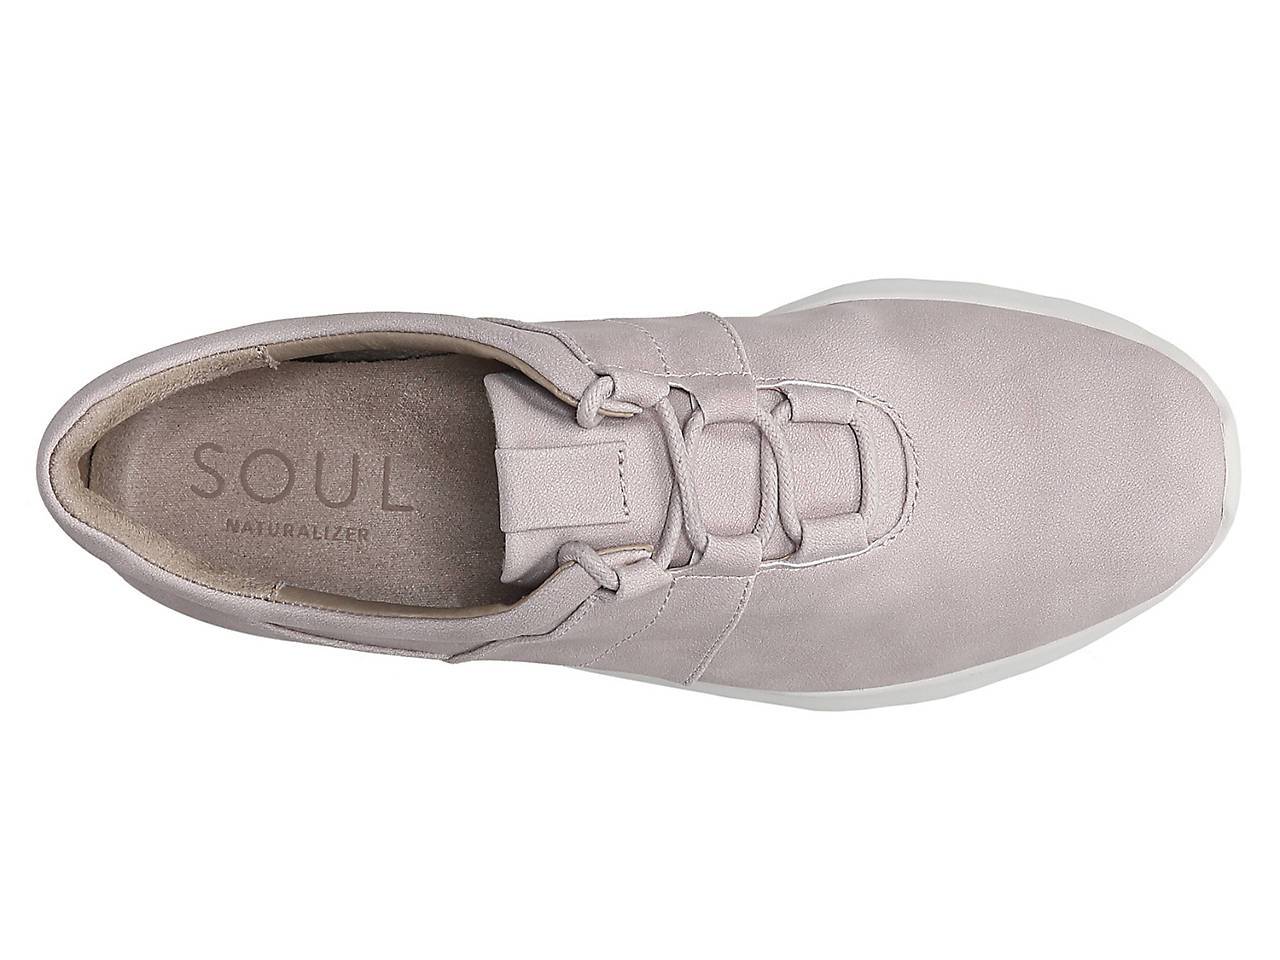 Soul Naturalizer Womens Shoes 38 Peace Sneaker